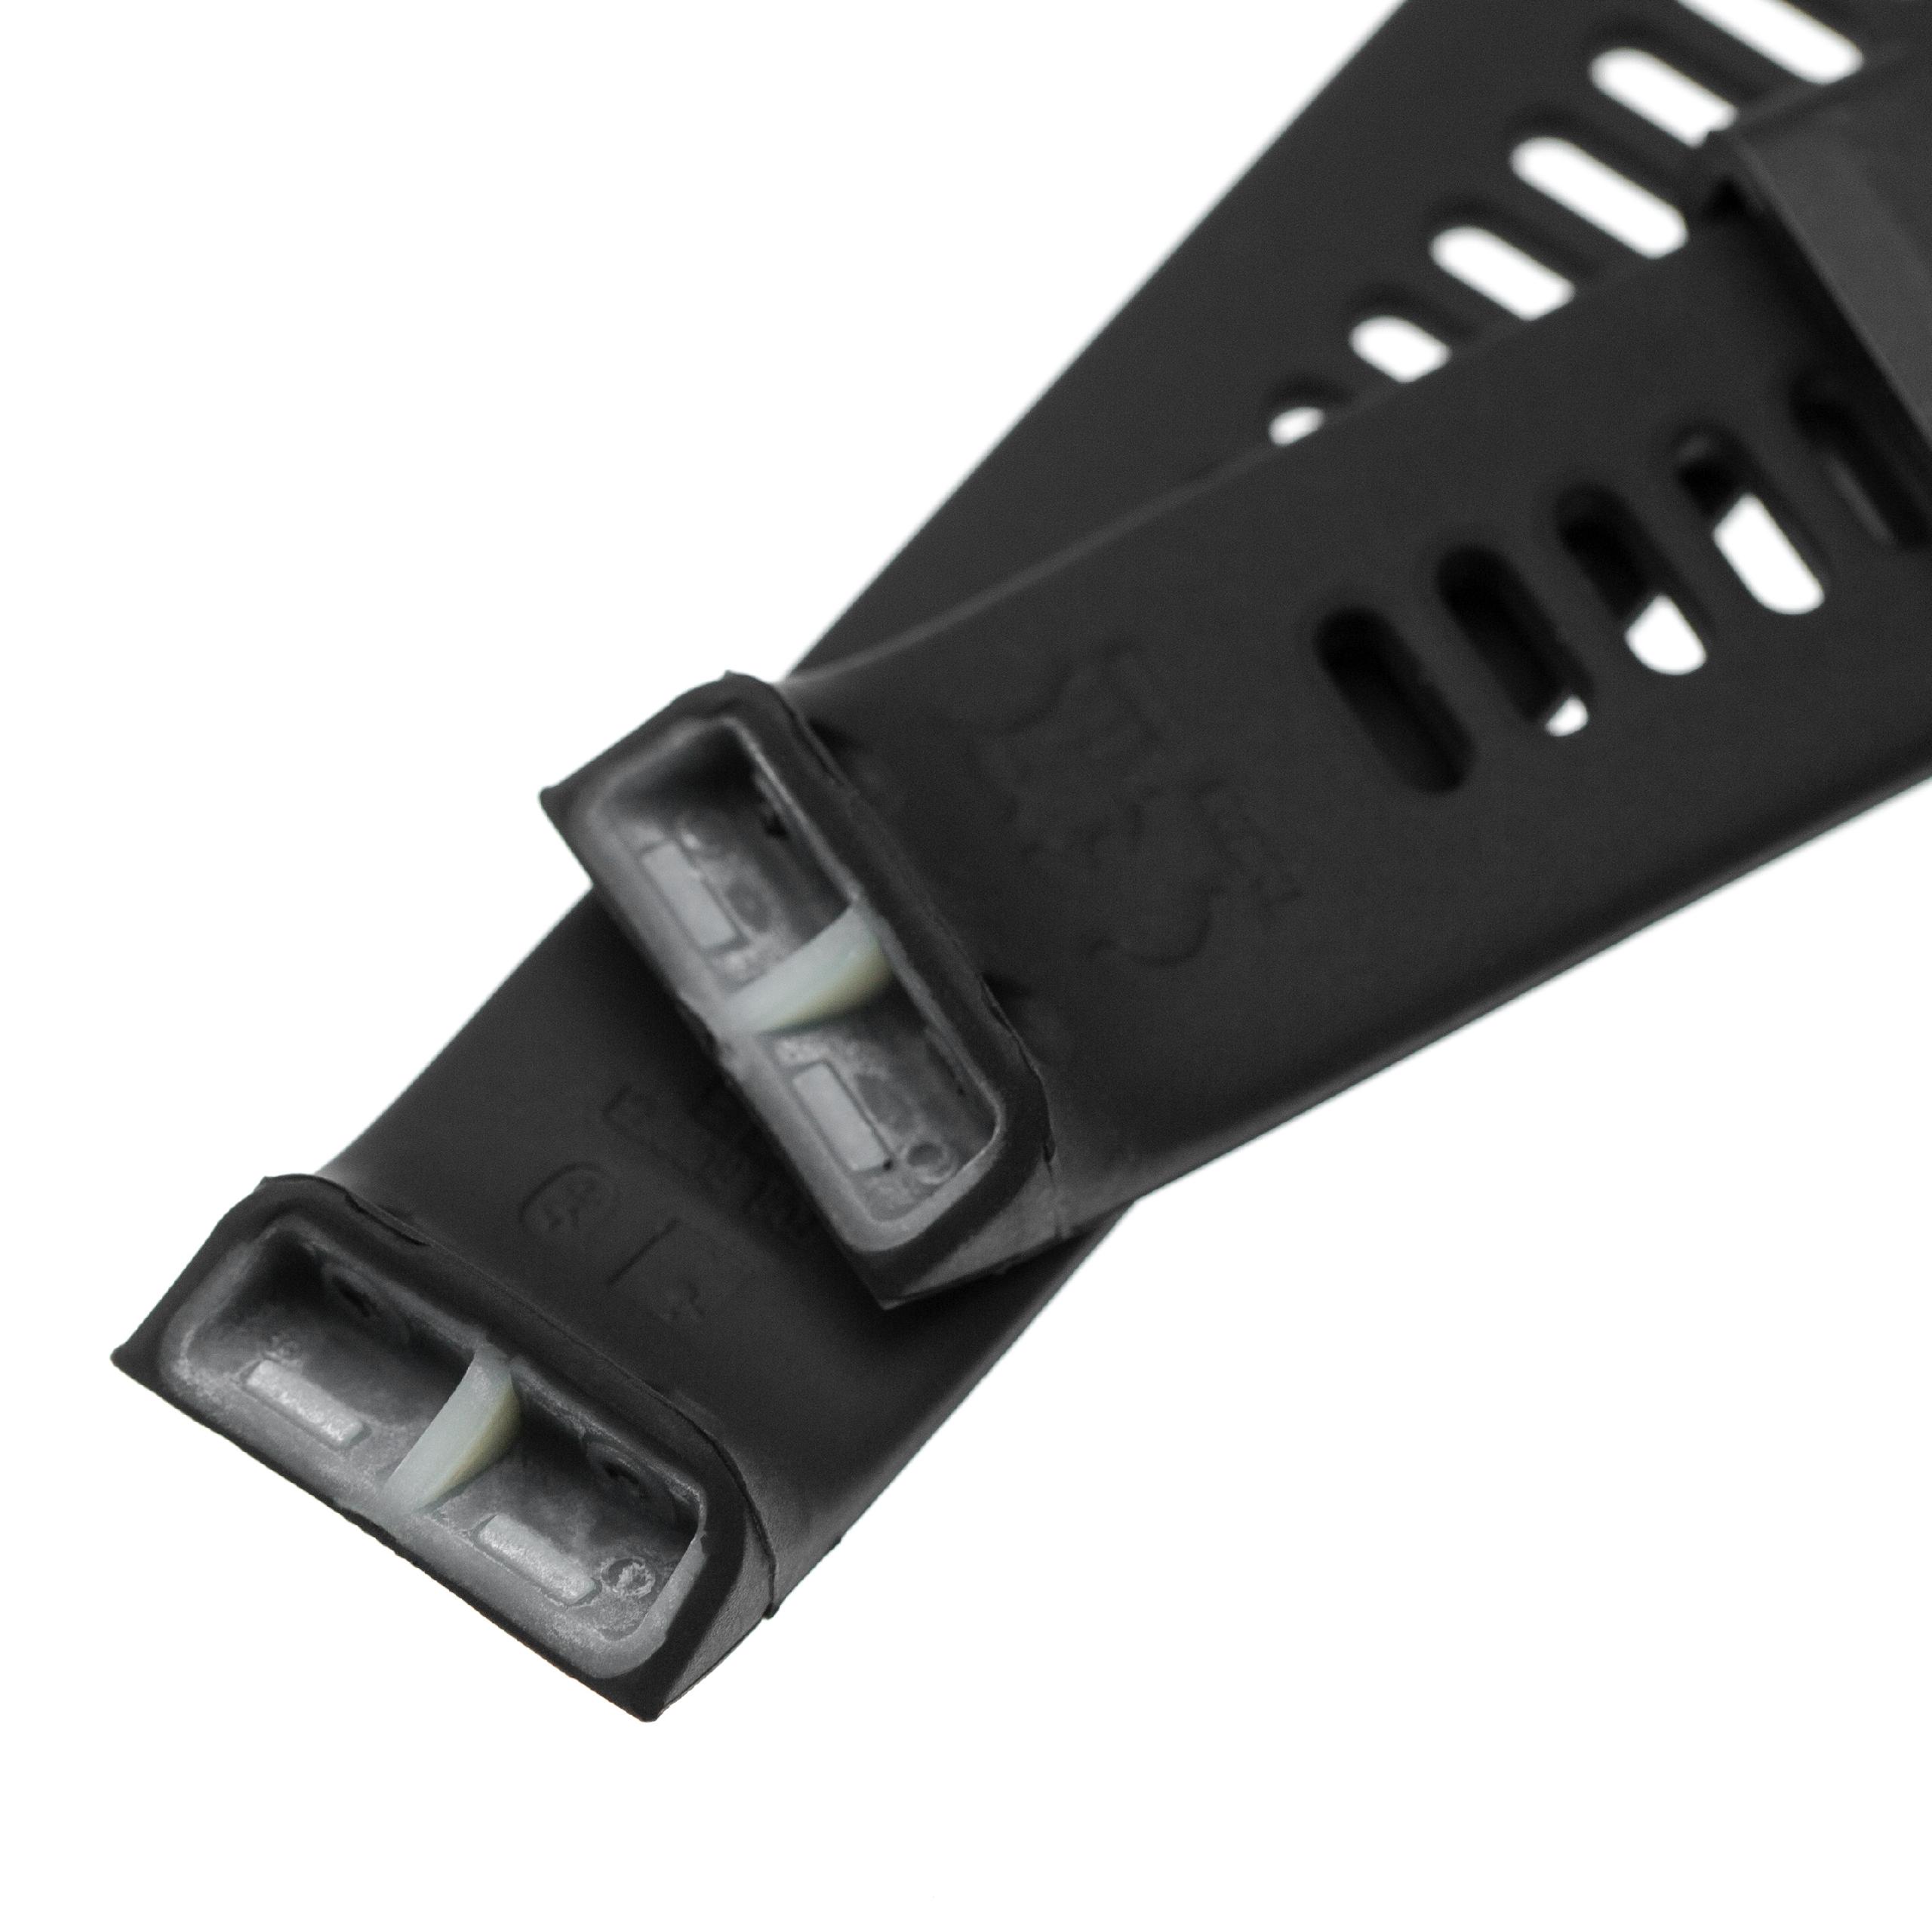 cinturino per Garmin Forerunner Smartwatch - 13,5 + 9,4 cm lunghezza, 23mm ampiezza, silicone, nero